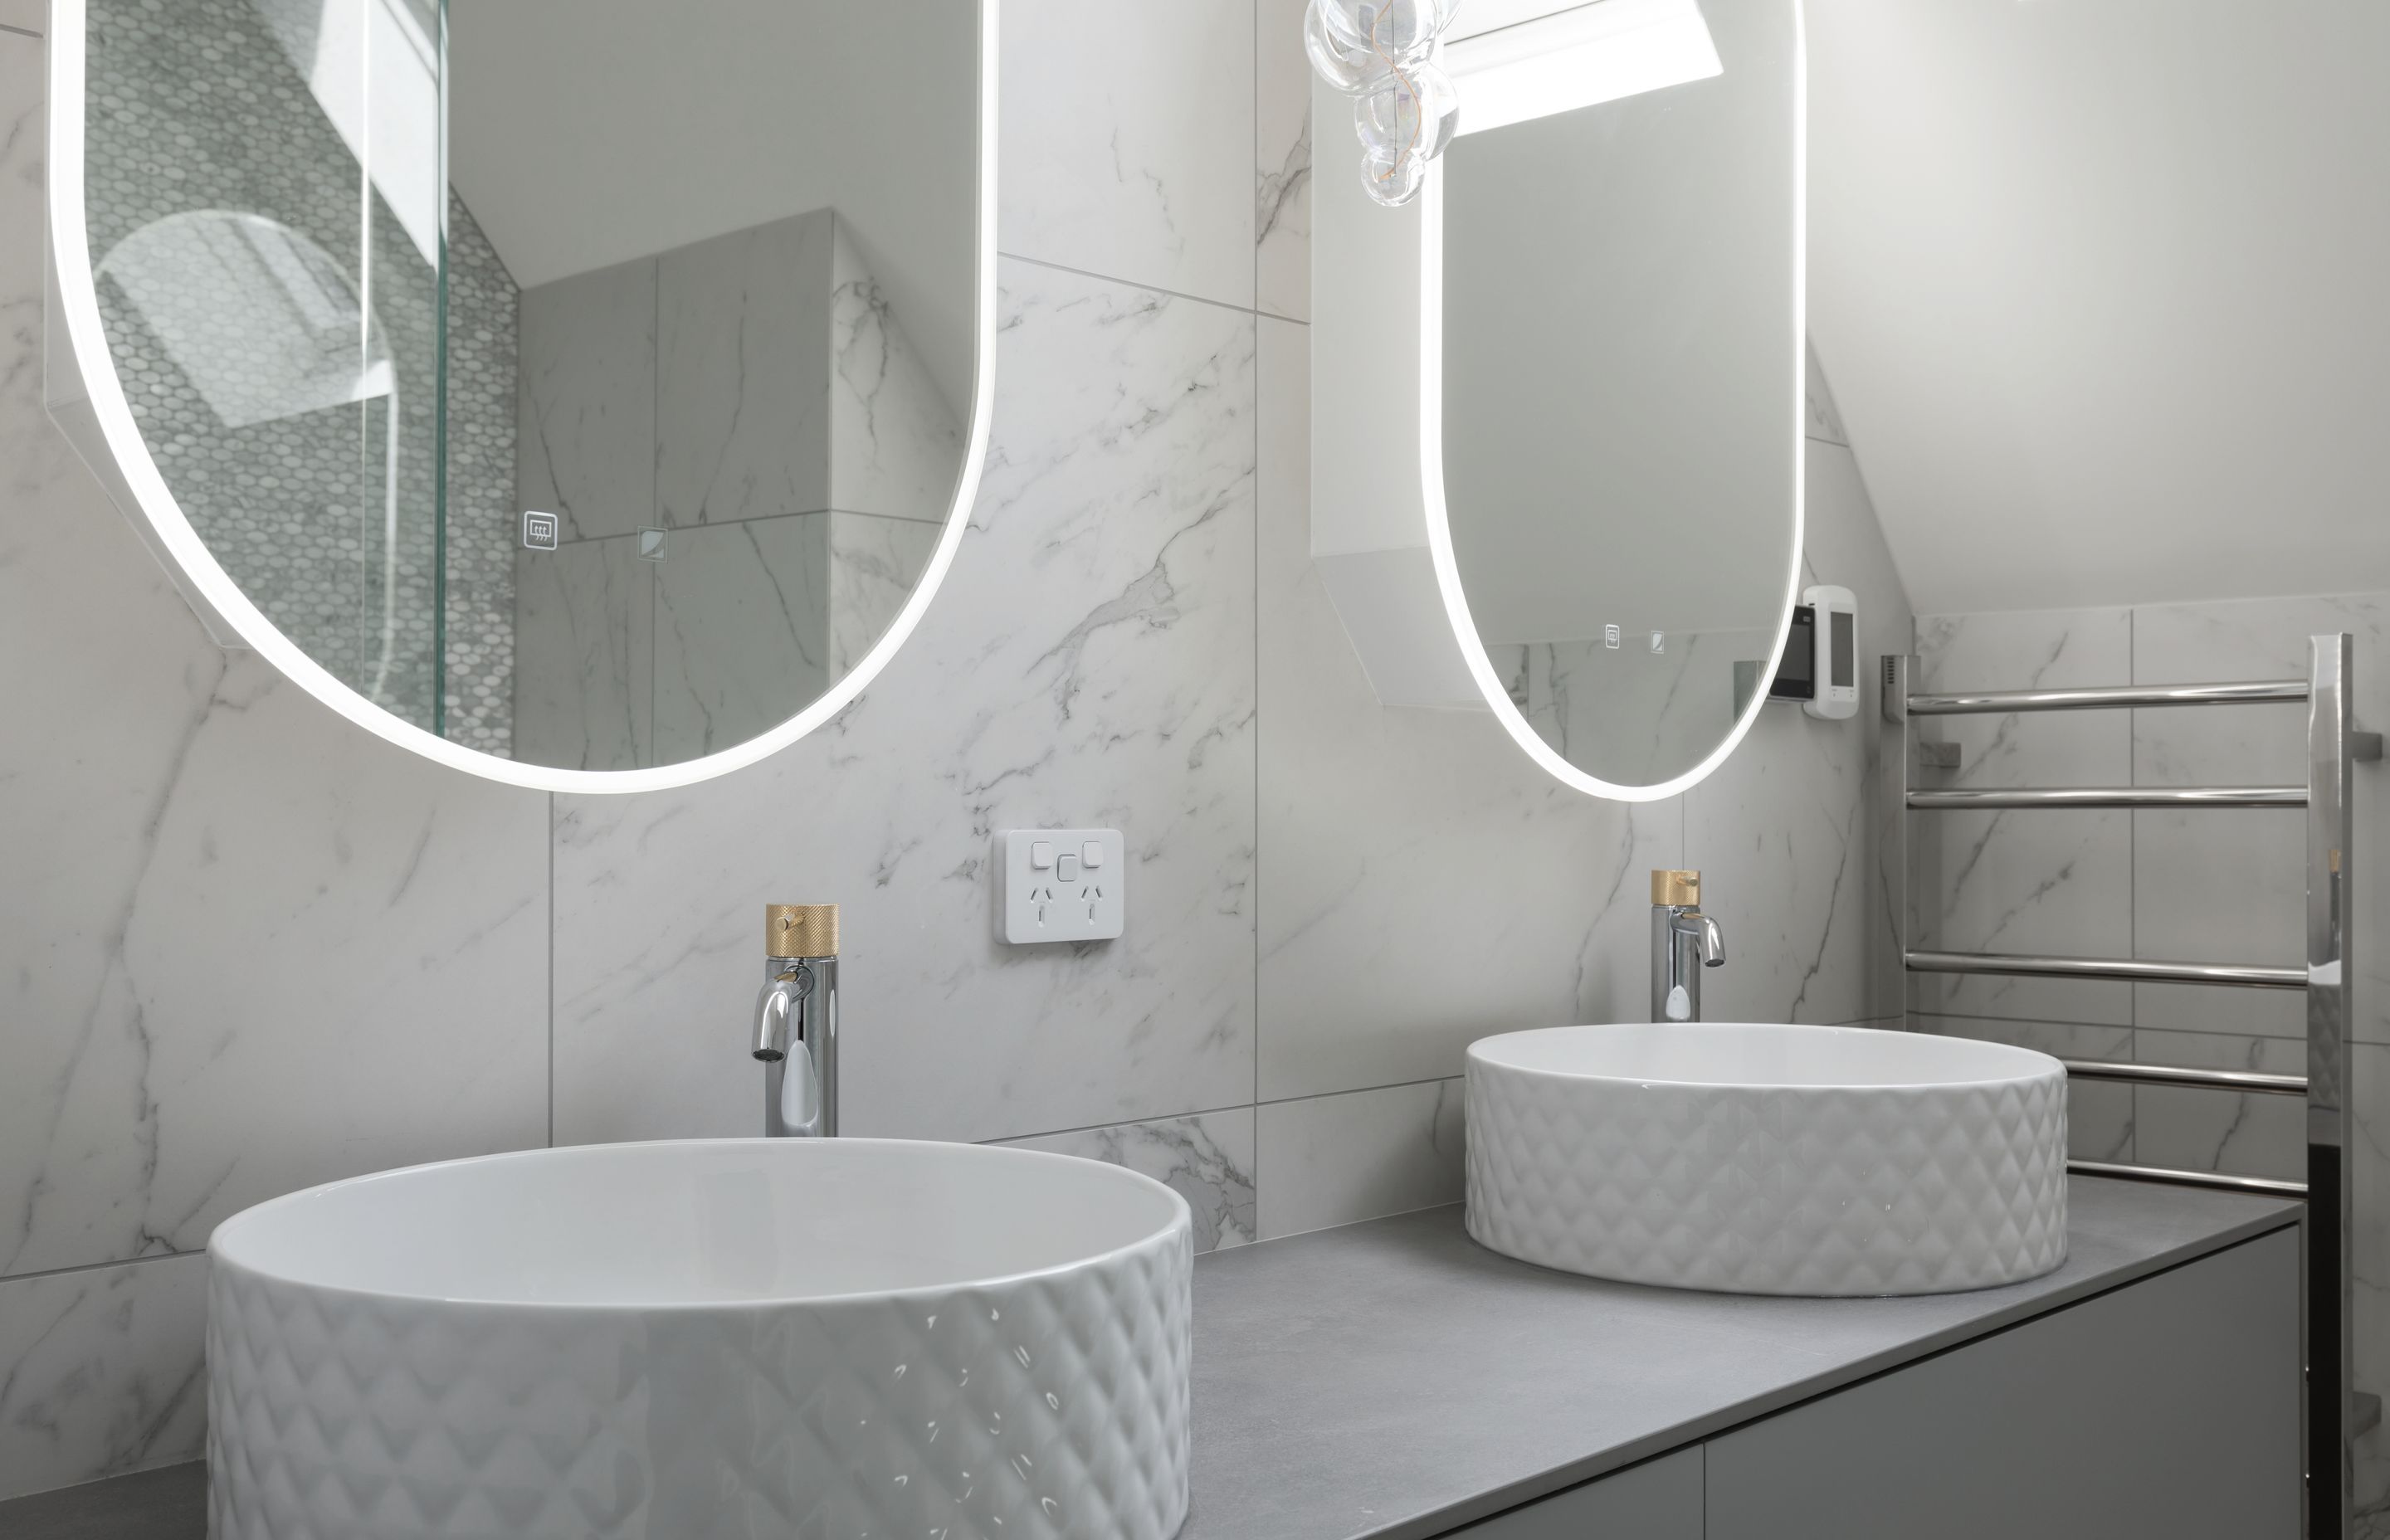 Ensuite Bathroom - double vessel basin with texture